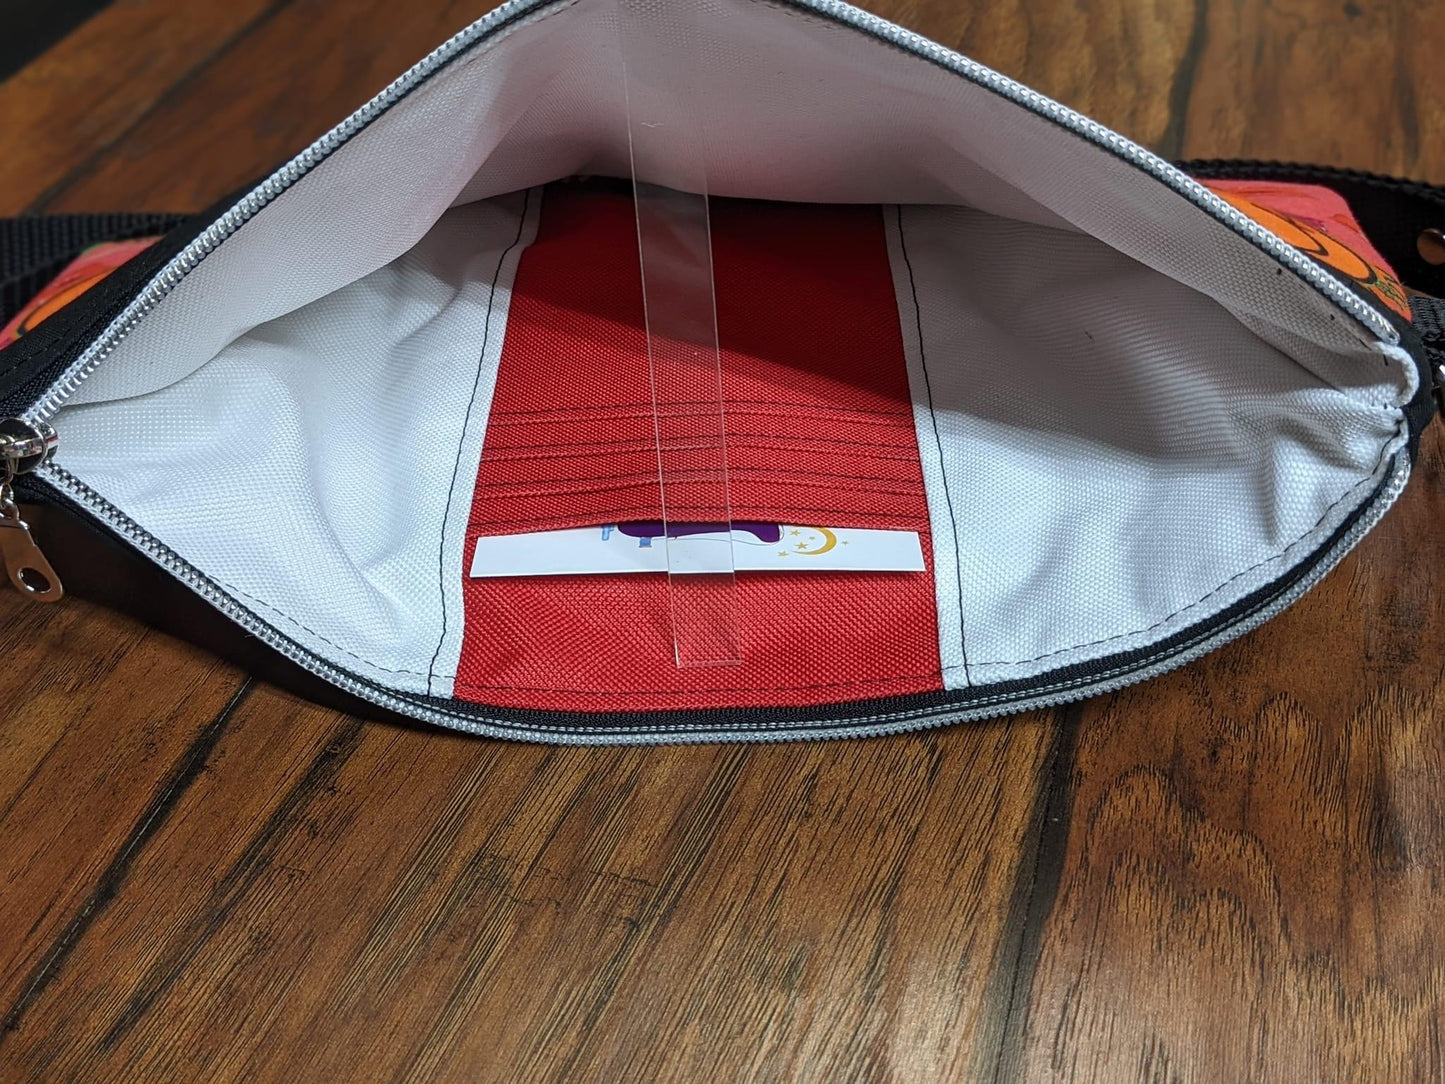 Brief Encounter Hip Bag Sewing Pattern